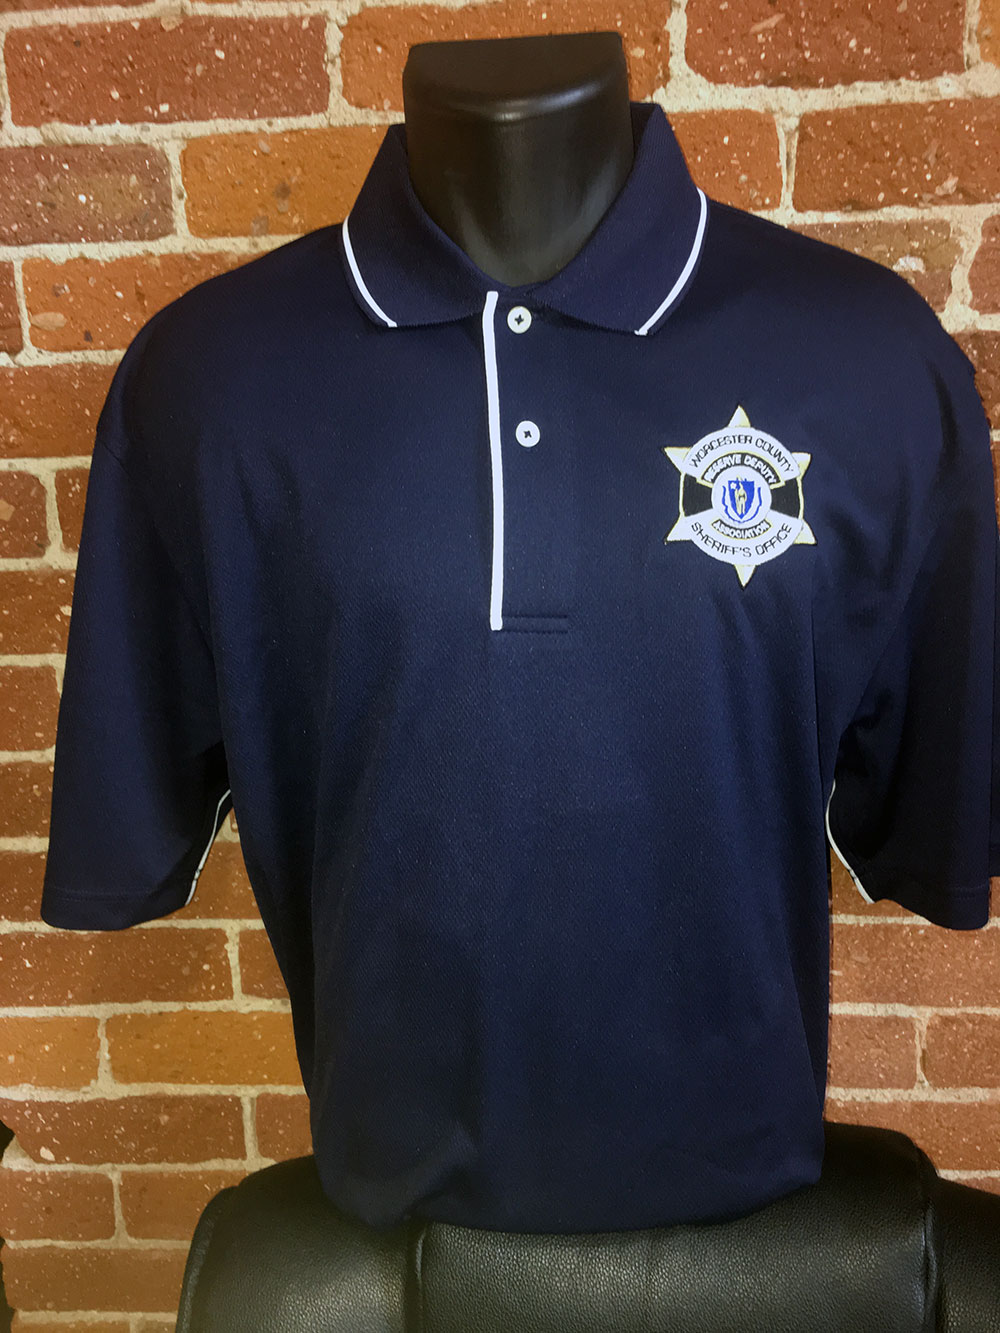 Unisex Polo Knit Golf Shirts - Reserve Deputy Sheriff Association